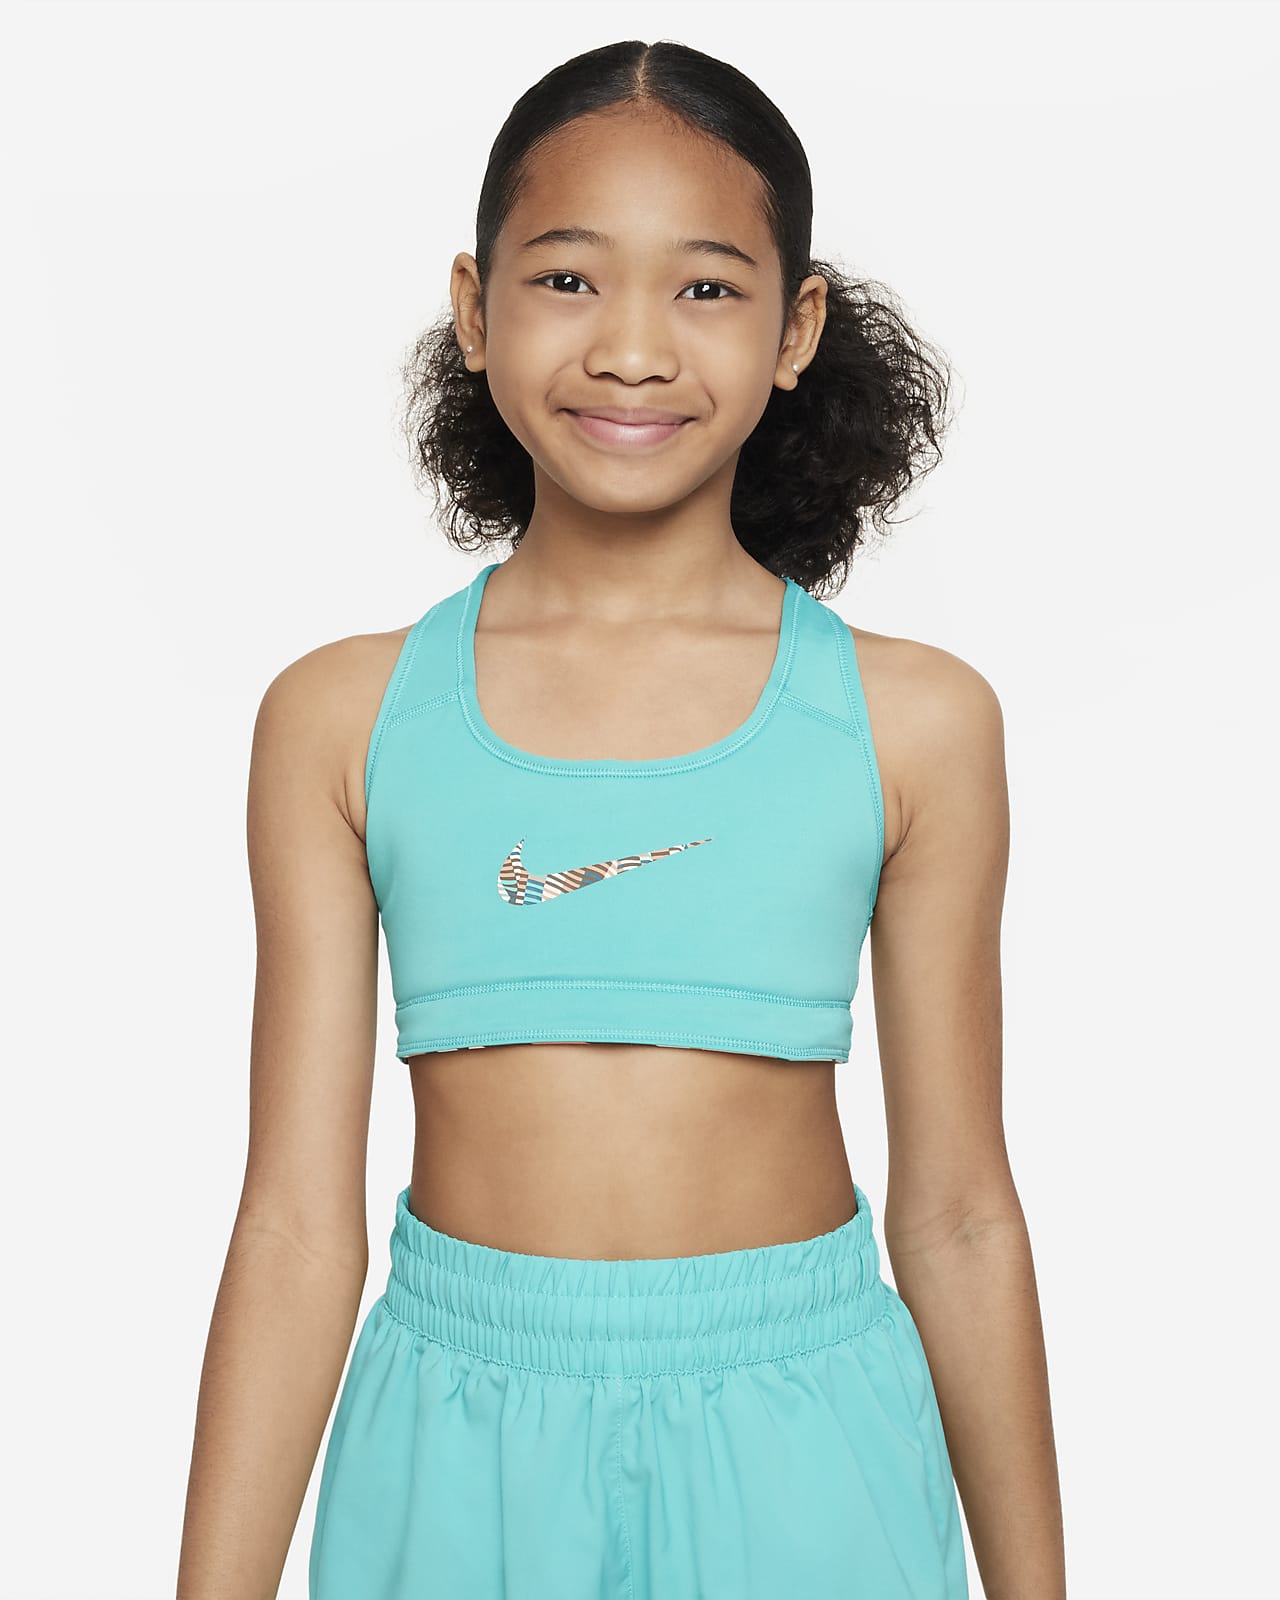  Nike Girl's Swoosh Print Reversible Bra (Little Kids/Big Kids)  Archaeo Pink/Canyon Rust/White LG (14-16 Big Kid): Clothing, Shoes & Jewelry